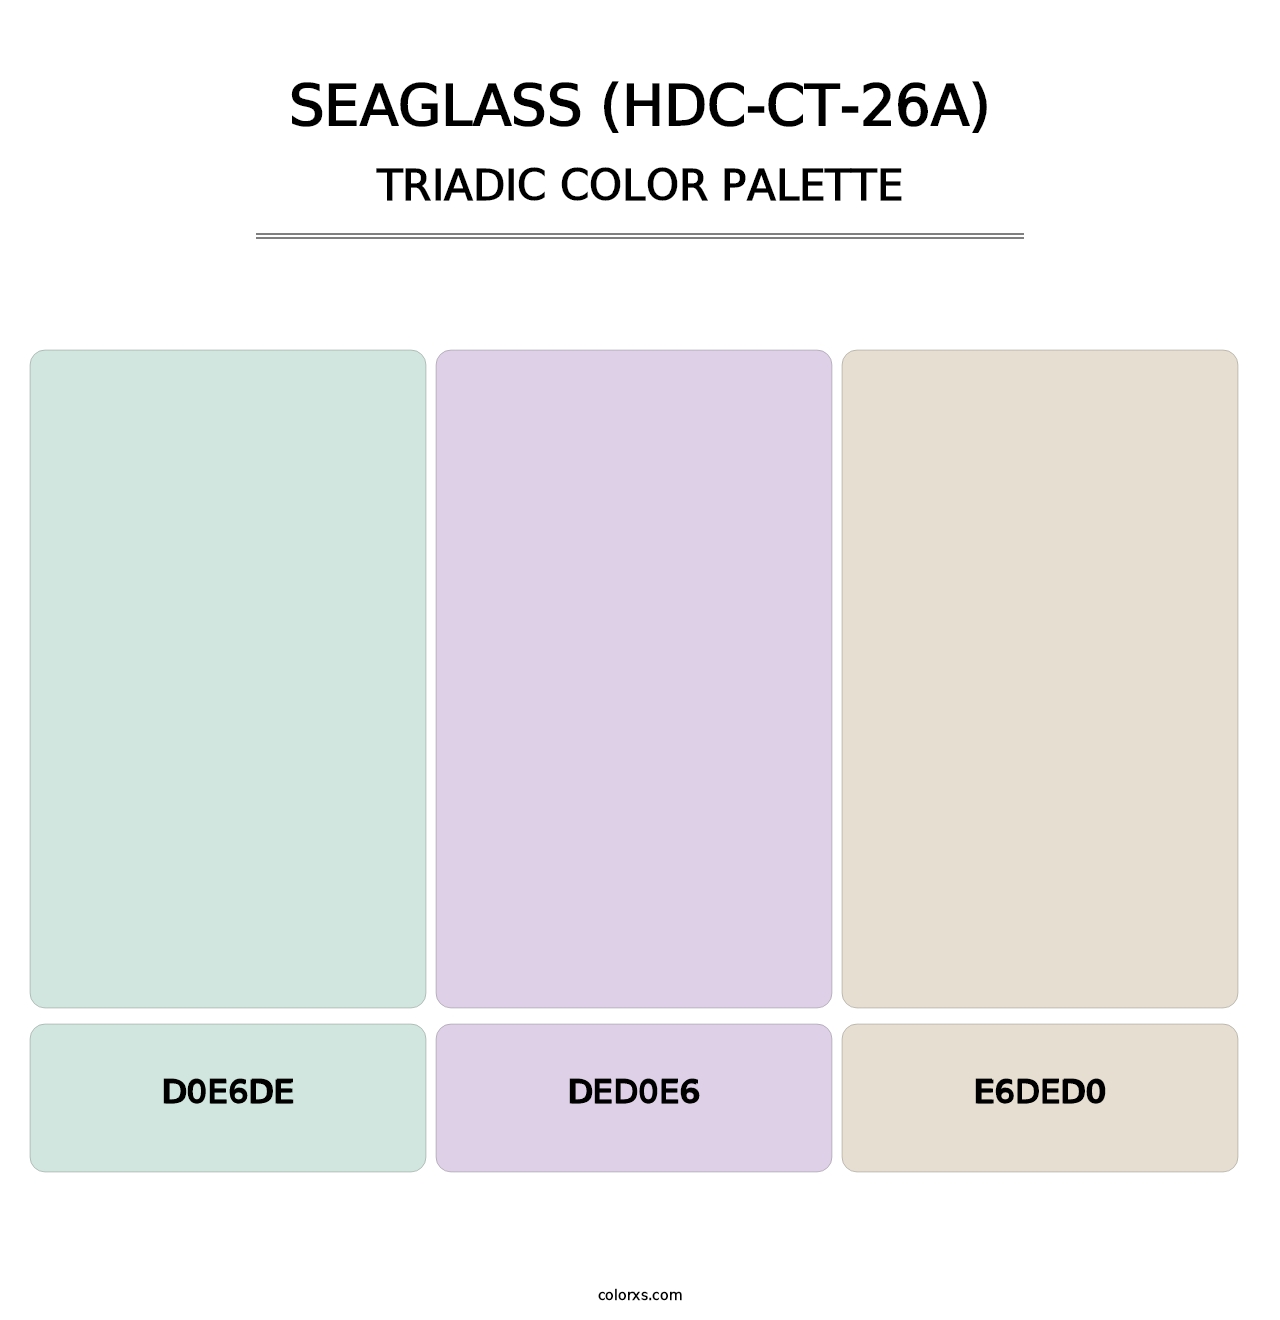 Seaglass (HDC-CT-26A) - Triadic Color Palette